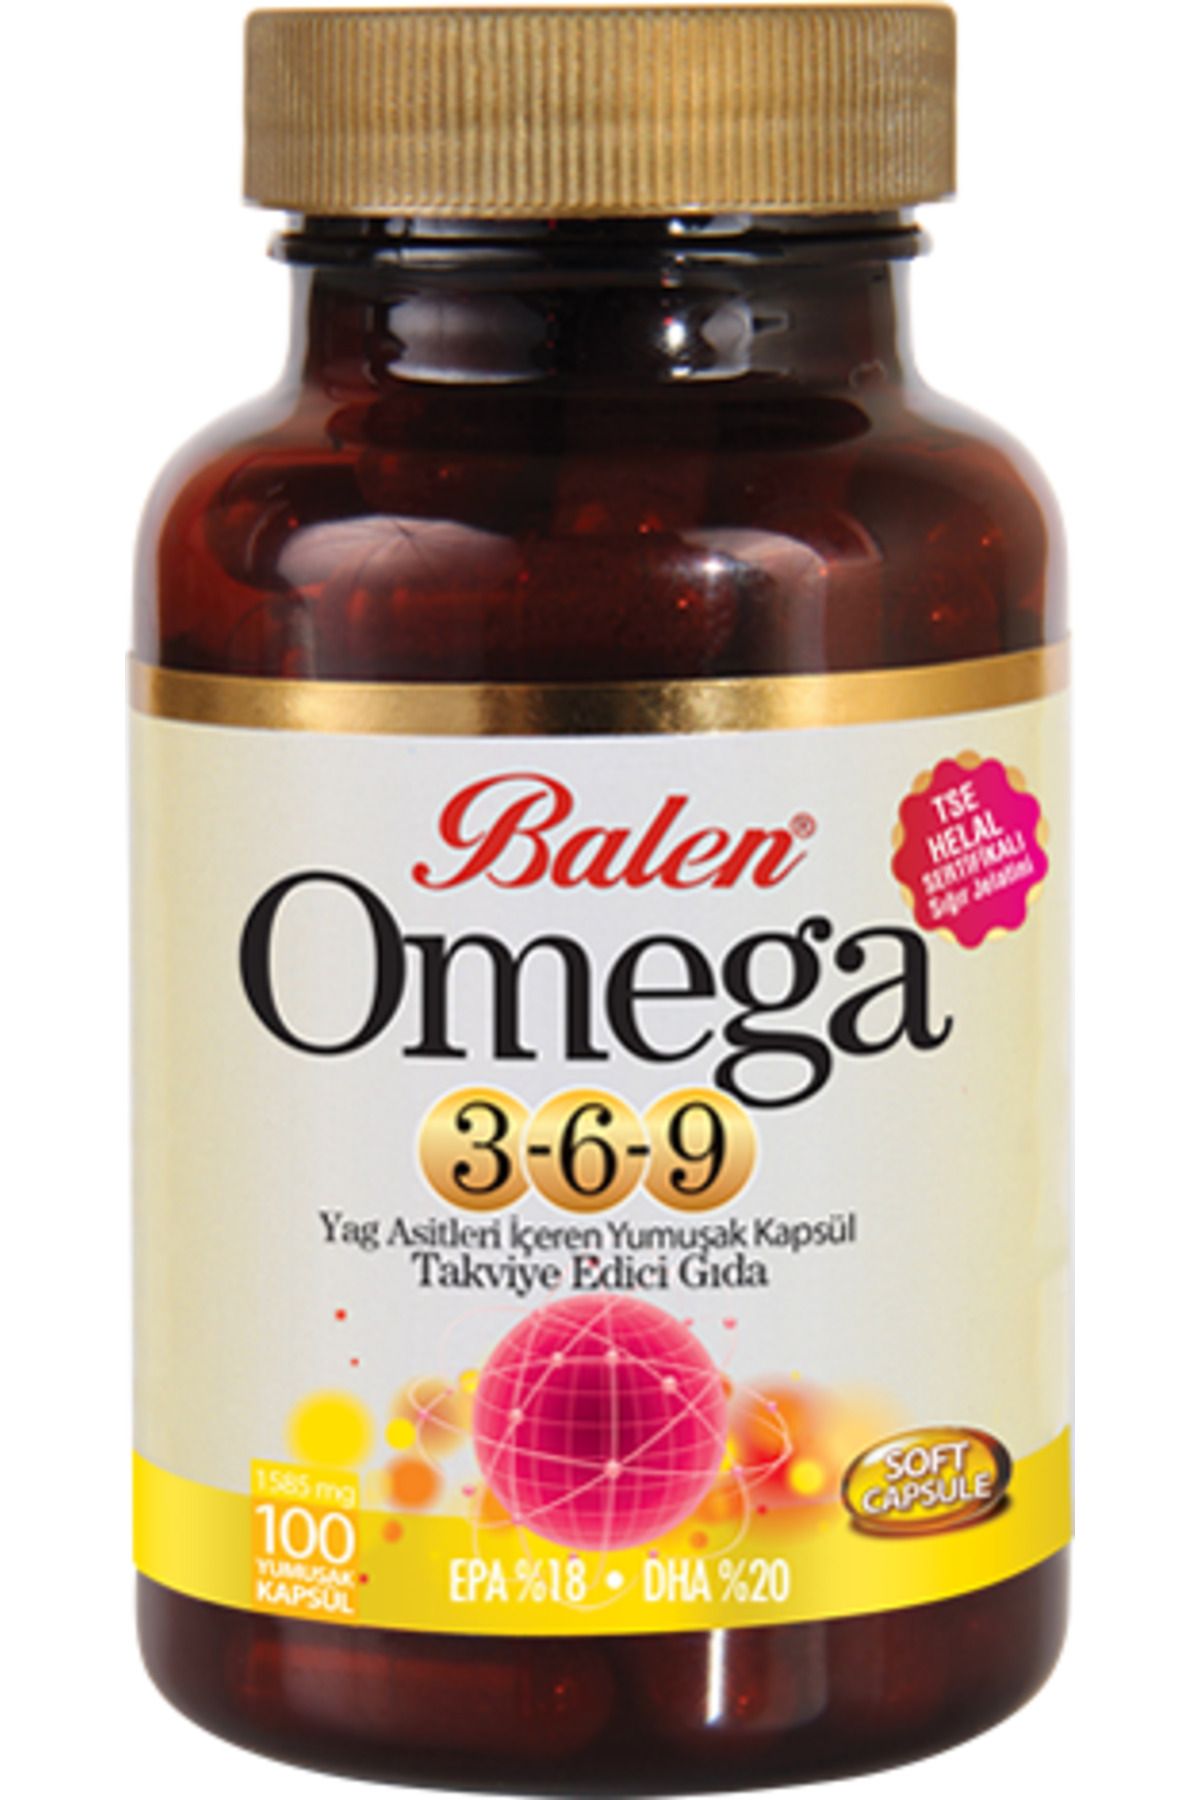 Balen Omega 3-6-9 Yağ Asitleri Içeren Kapsül 1585 Mg 100 Kapsül